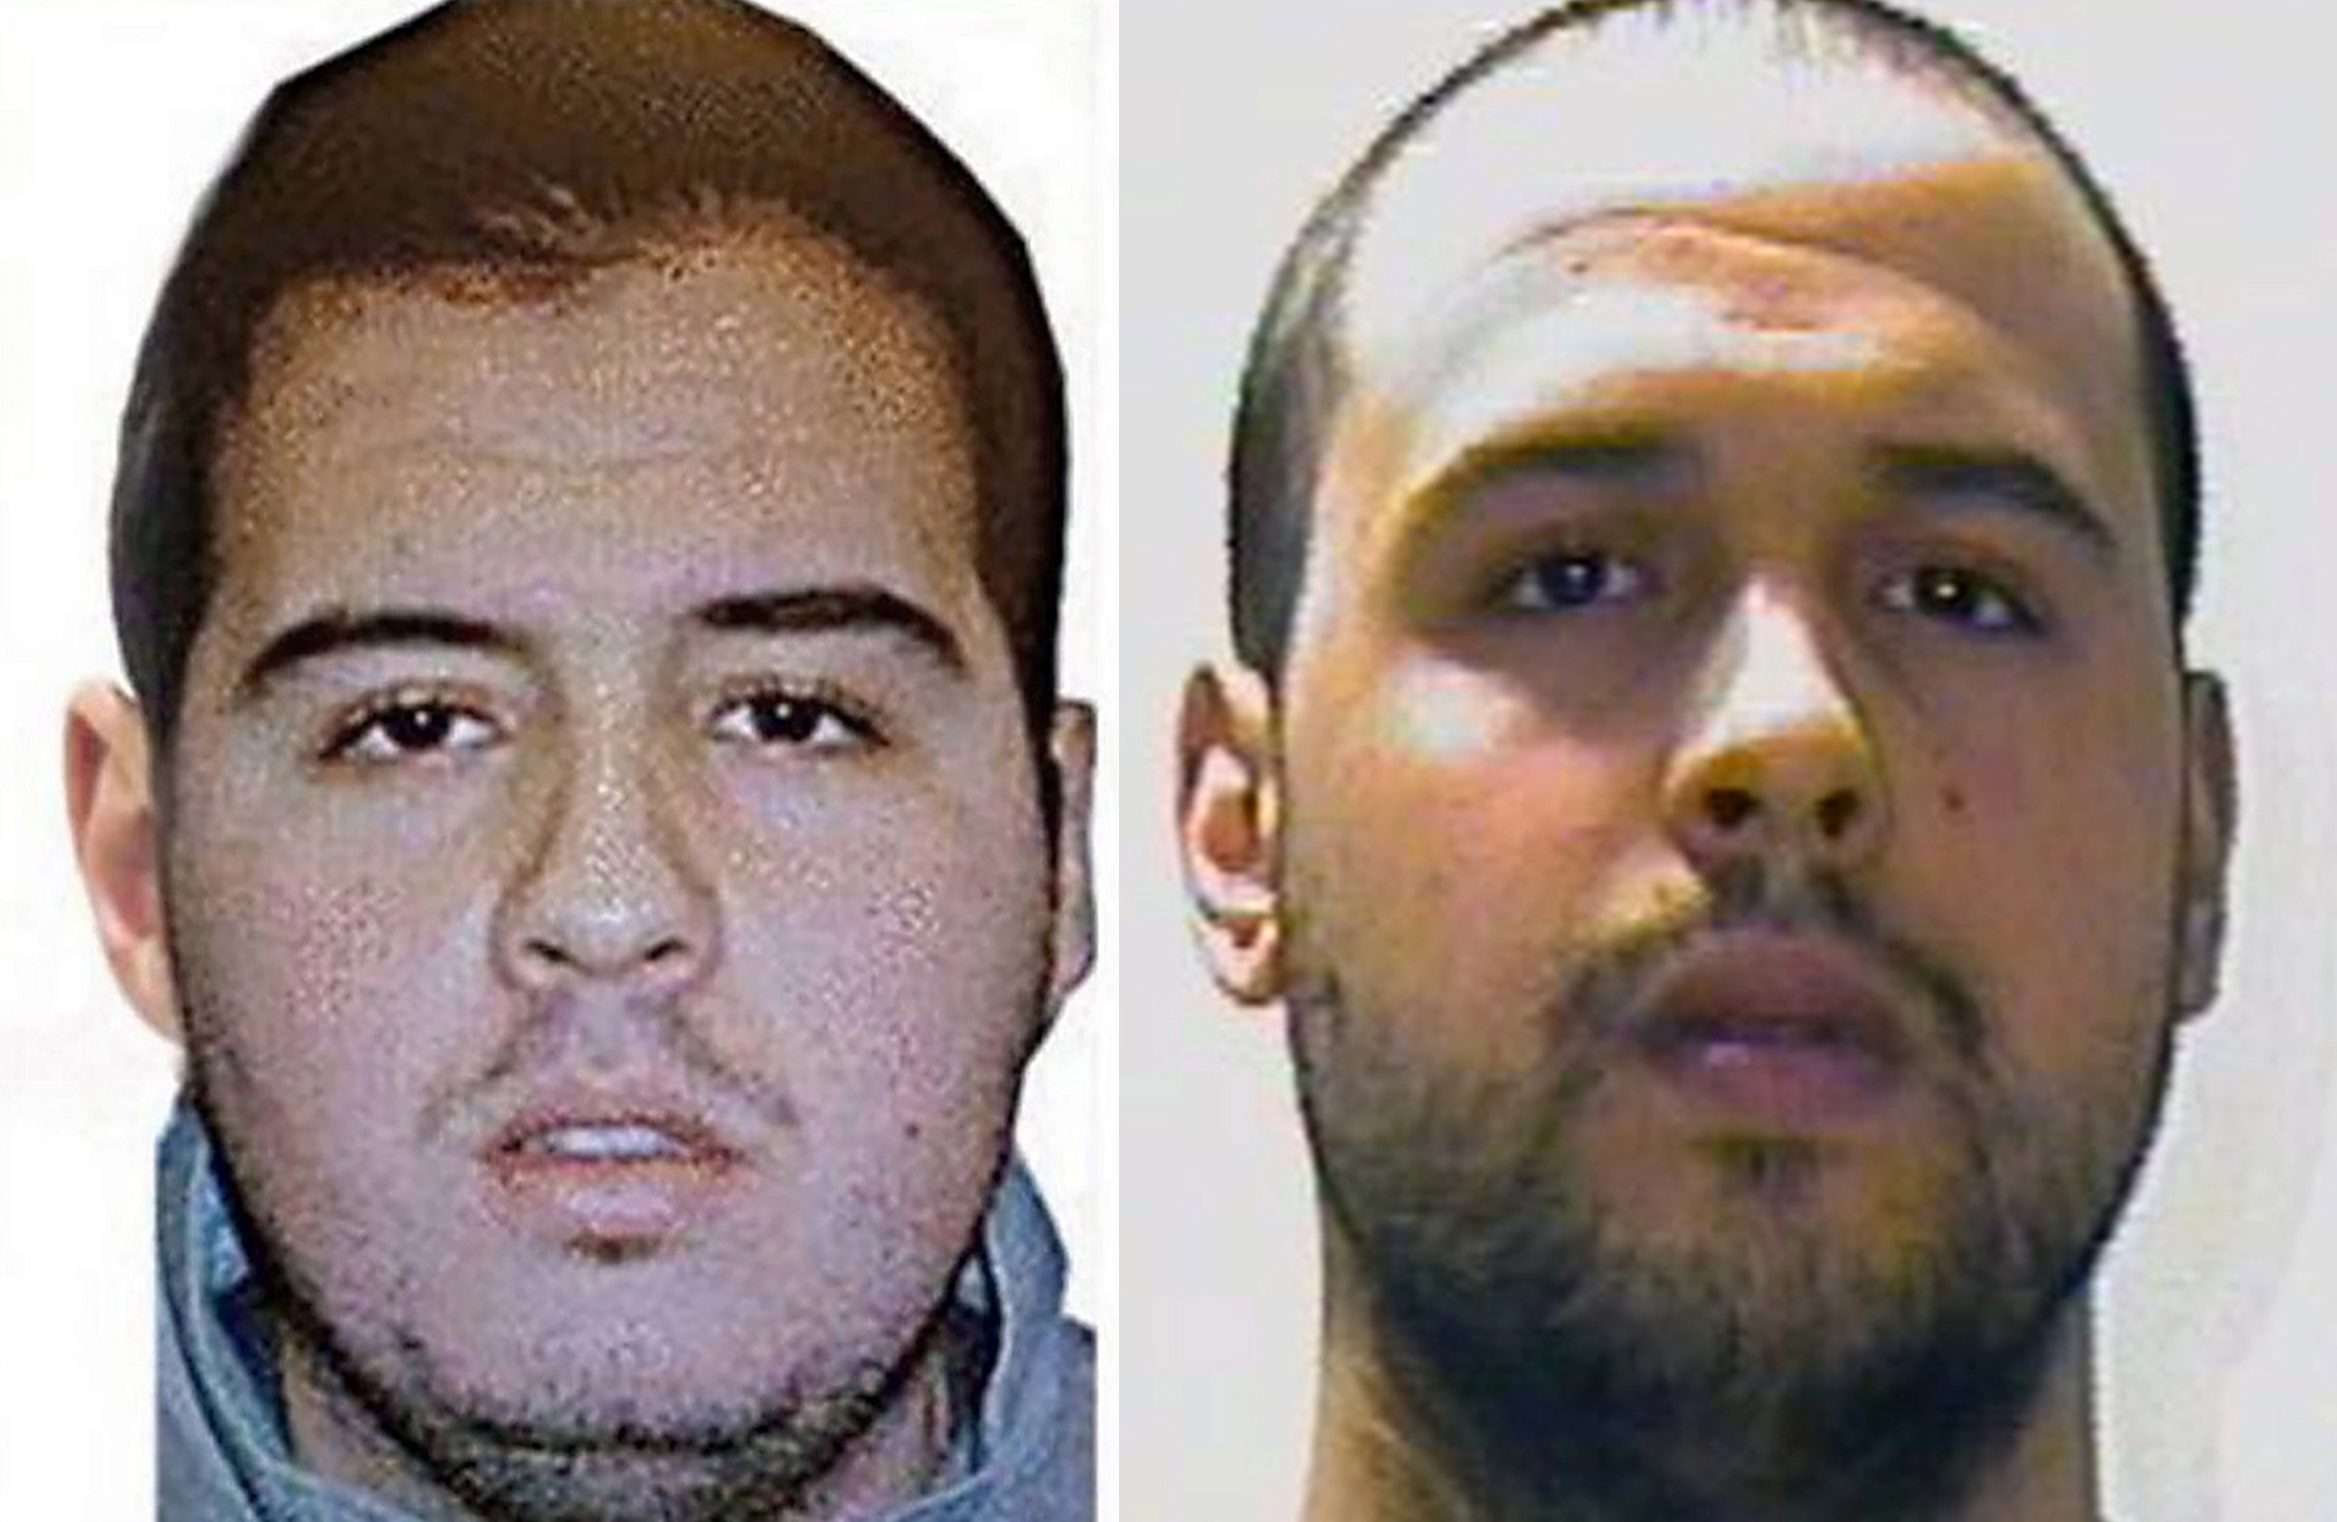 Interpol photos show Brussels bombers Ibrahim El Bakraoui (left) and his brother, Khalid El Bakraoui. Photos: EPA